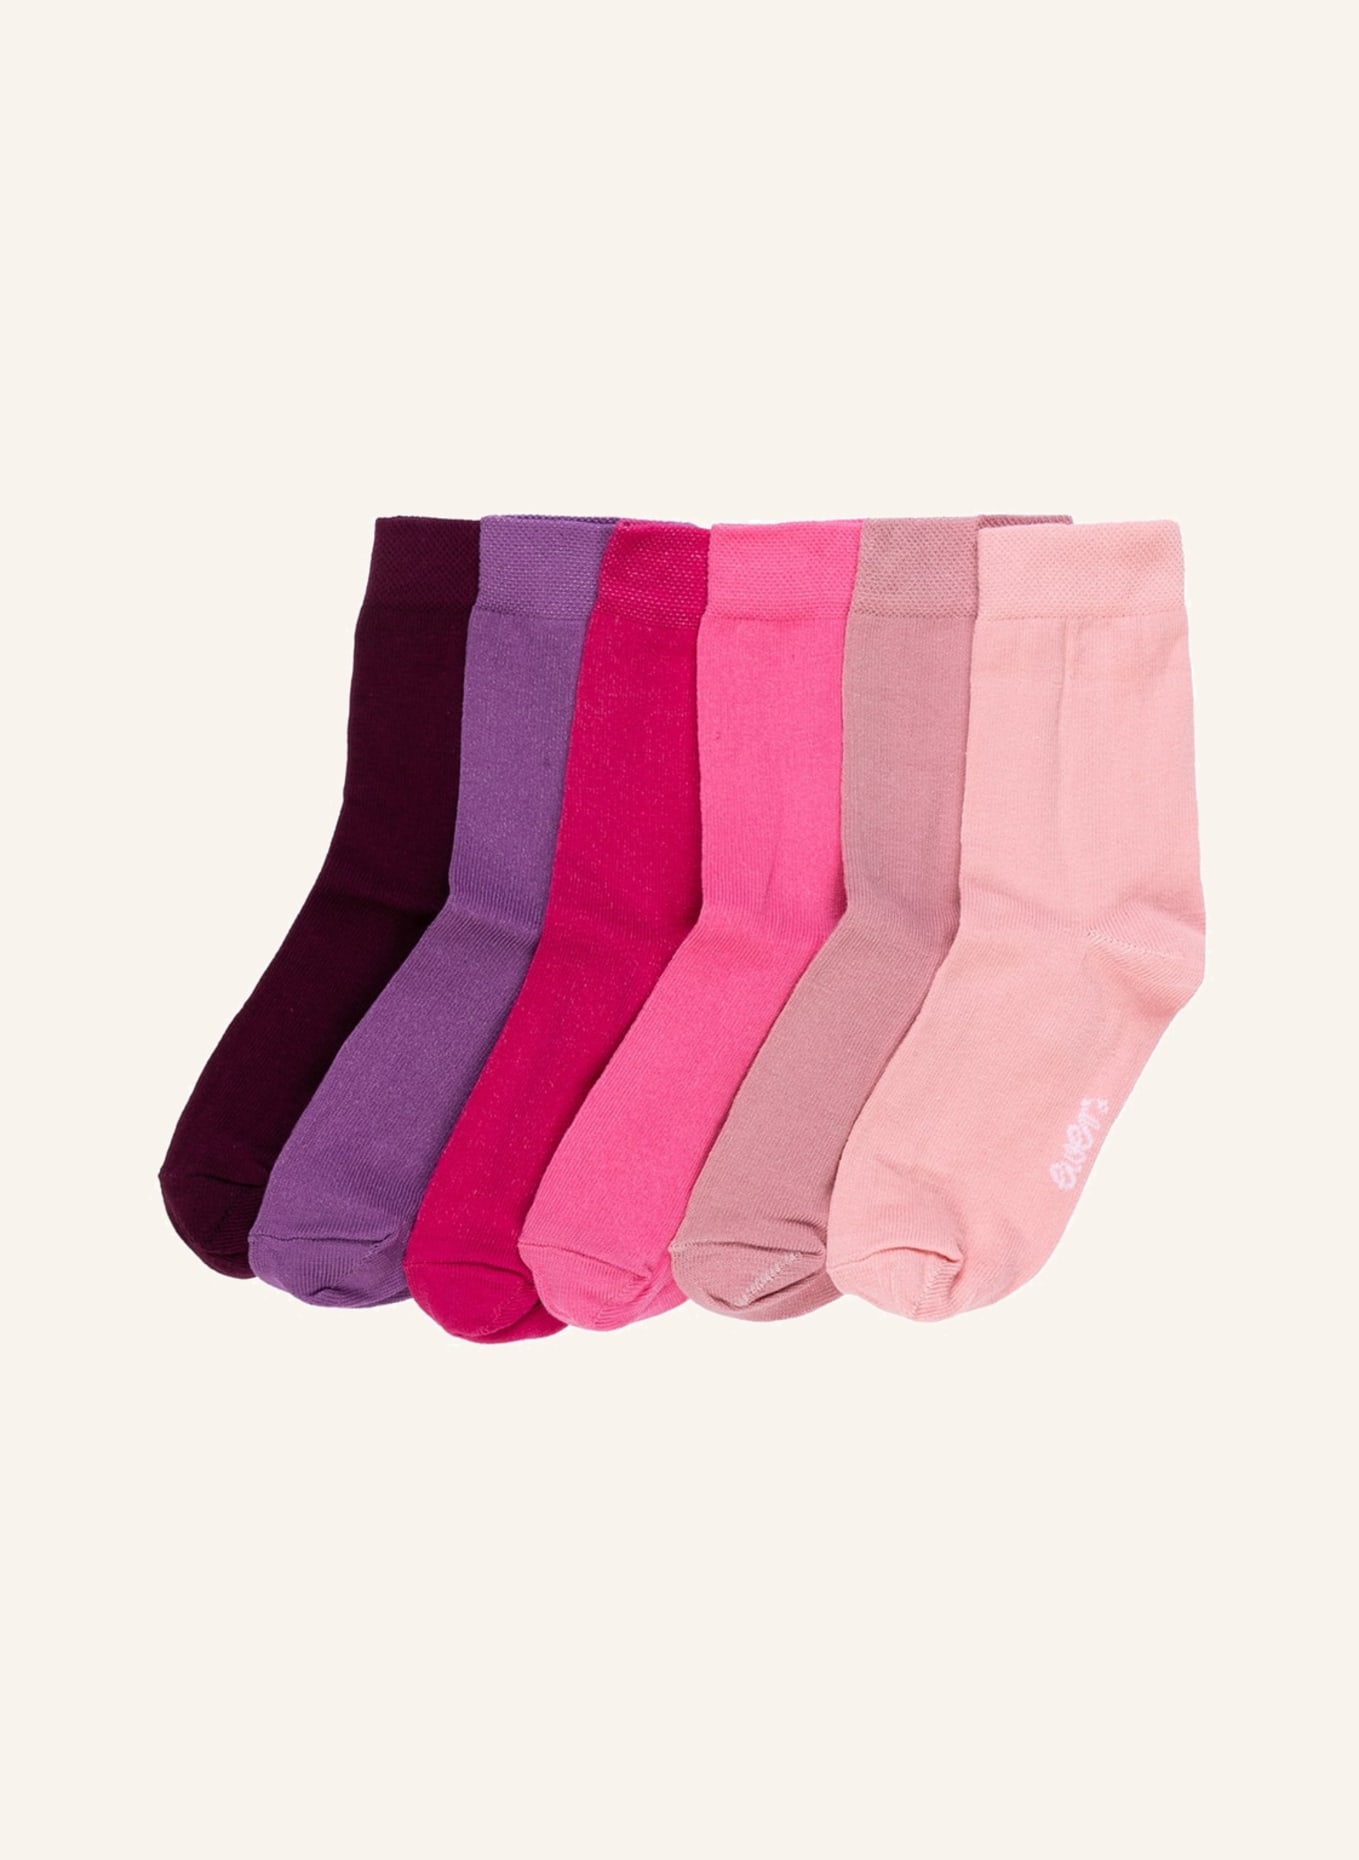 ewers COLLECTION 6er-Pack Socken, Farbe: 60 60 flieder -rosé - beere (Bild 1)